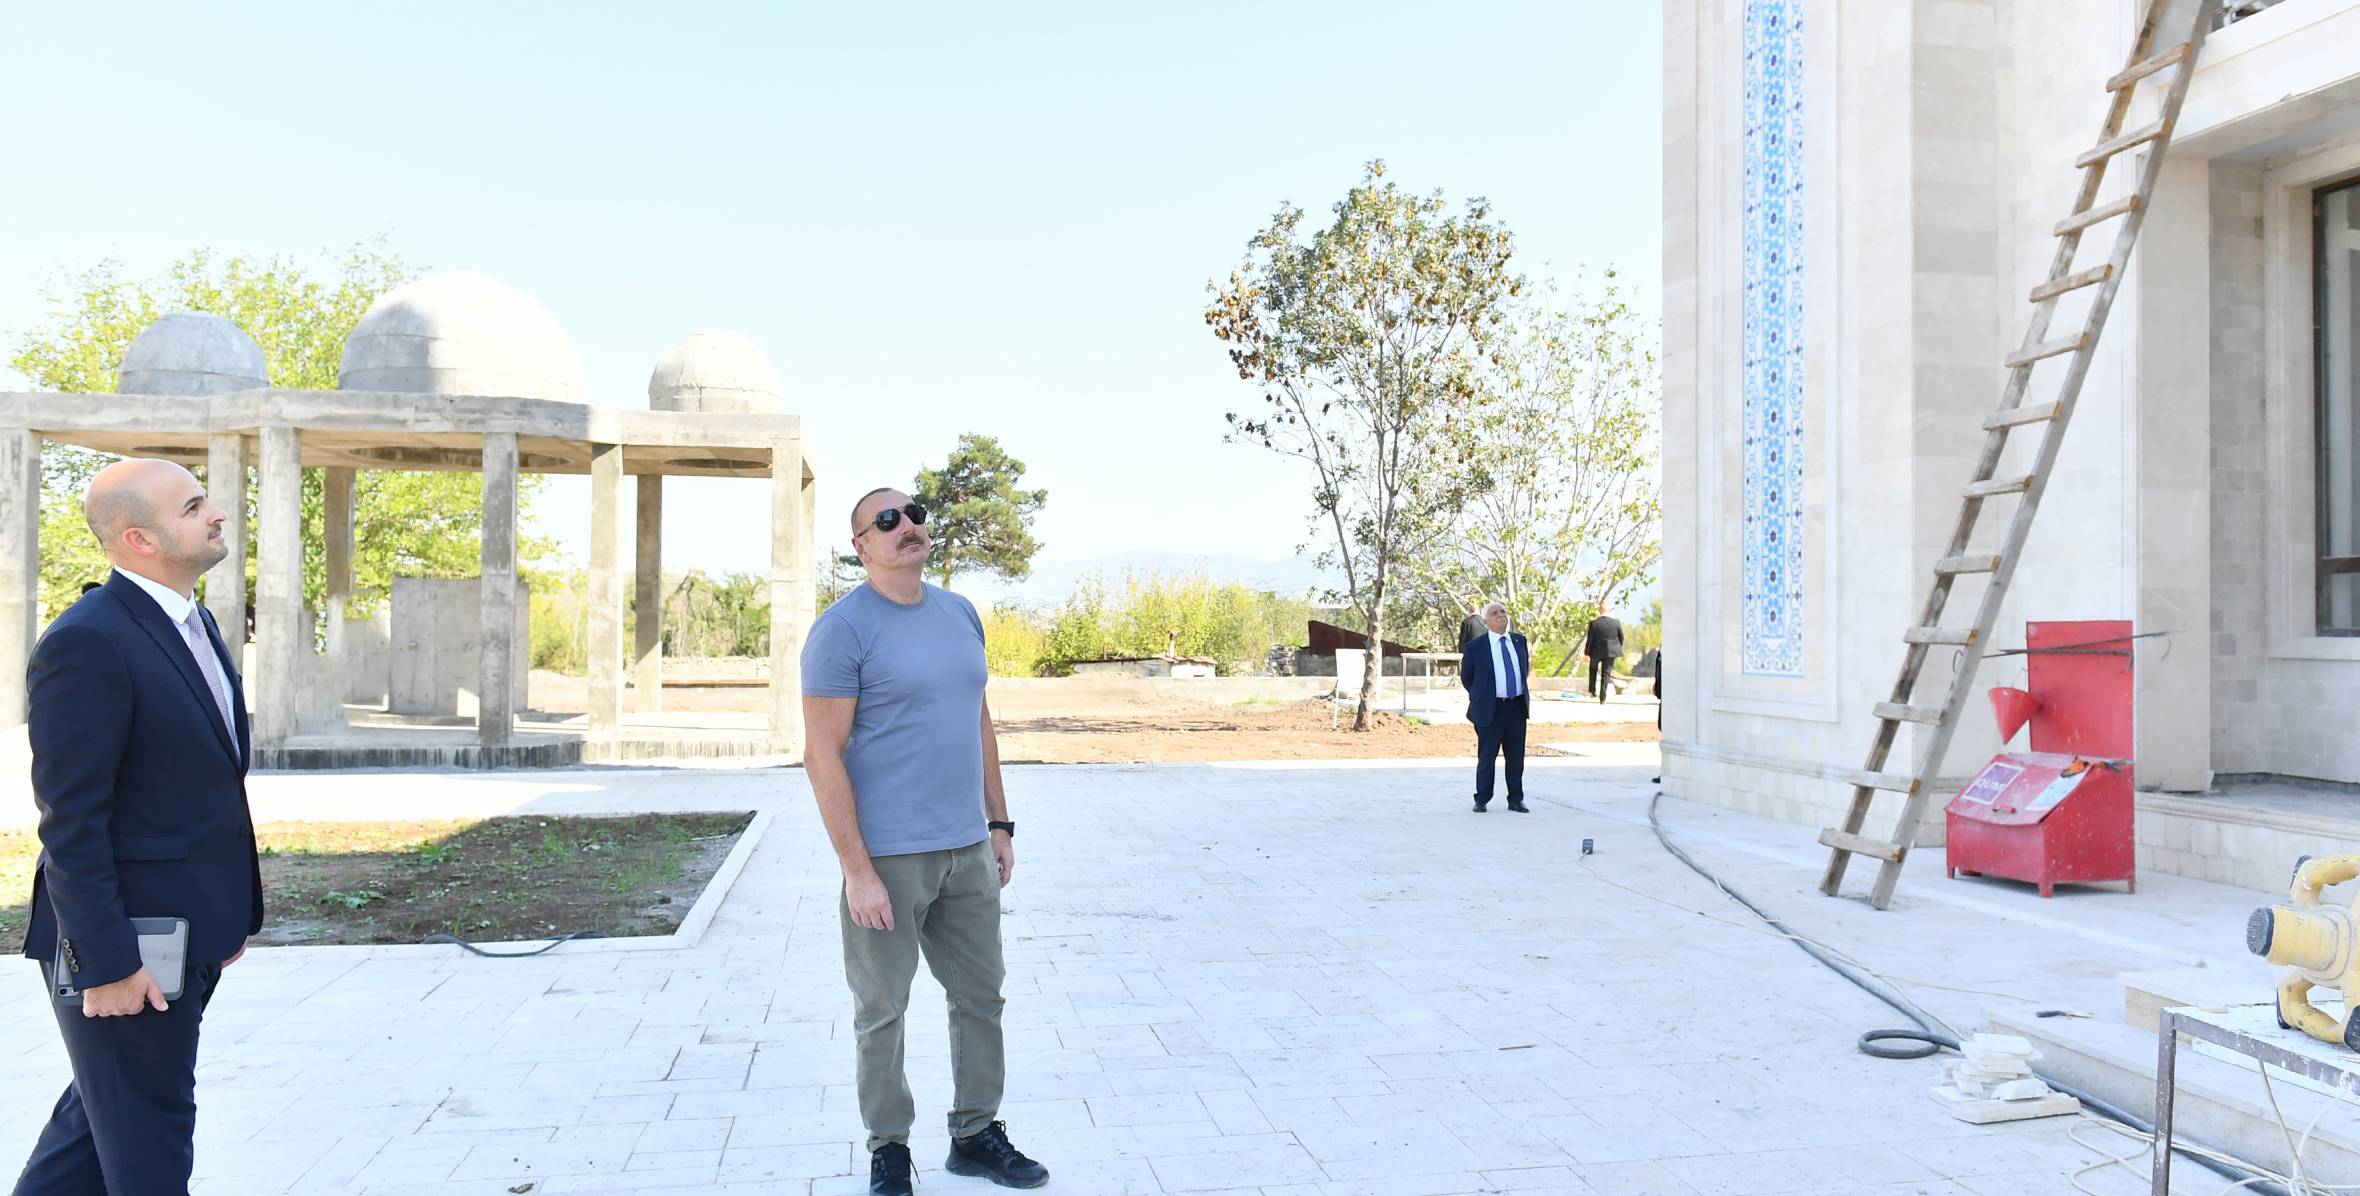 Ilham Aliyev examined construction progress of Zangilan City Mosque build by Heydar Aliyev Foundation